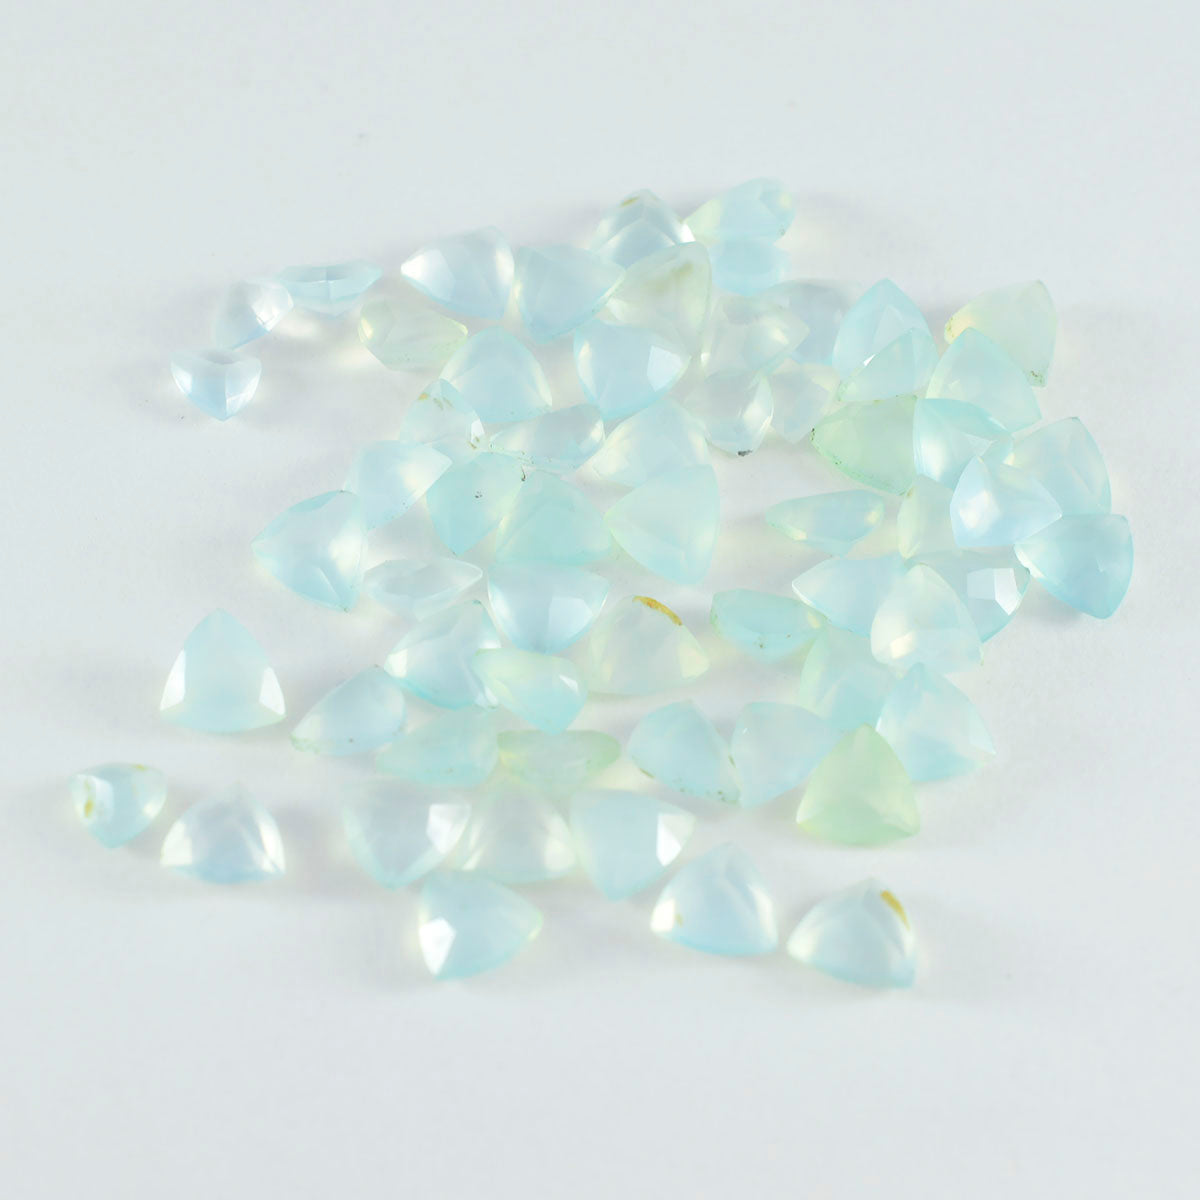 Riyogems 1PC Real Aqua Chalcedony Faceted 5X5 mm Trillion Shape A+ Quality Loose Gems